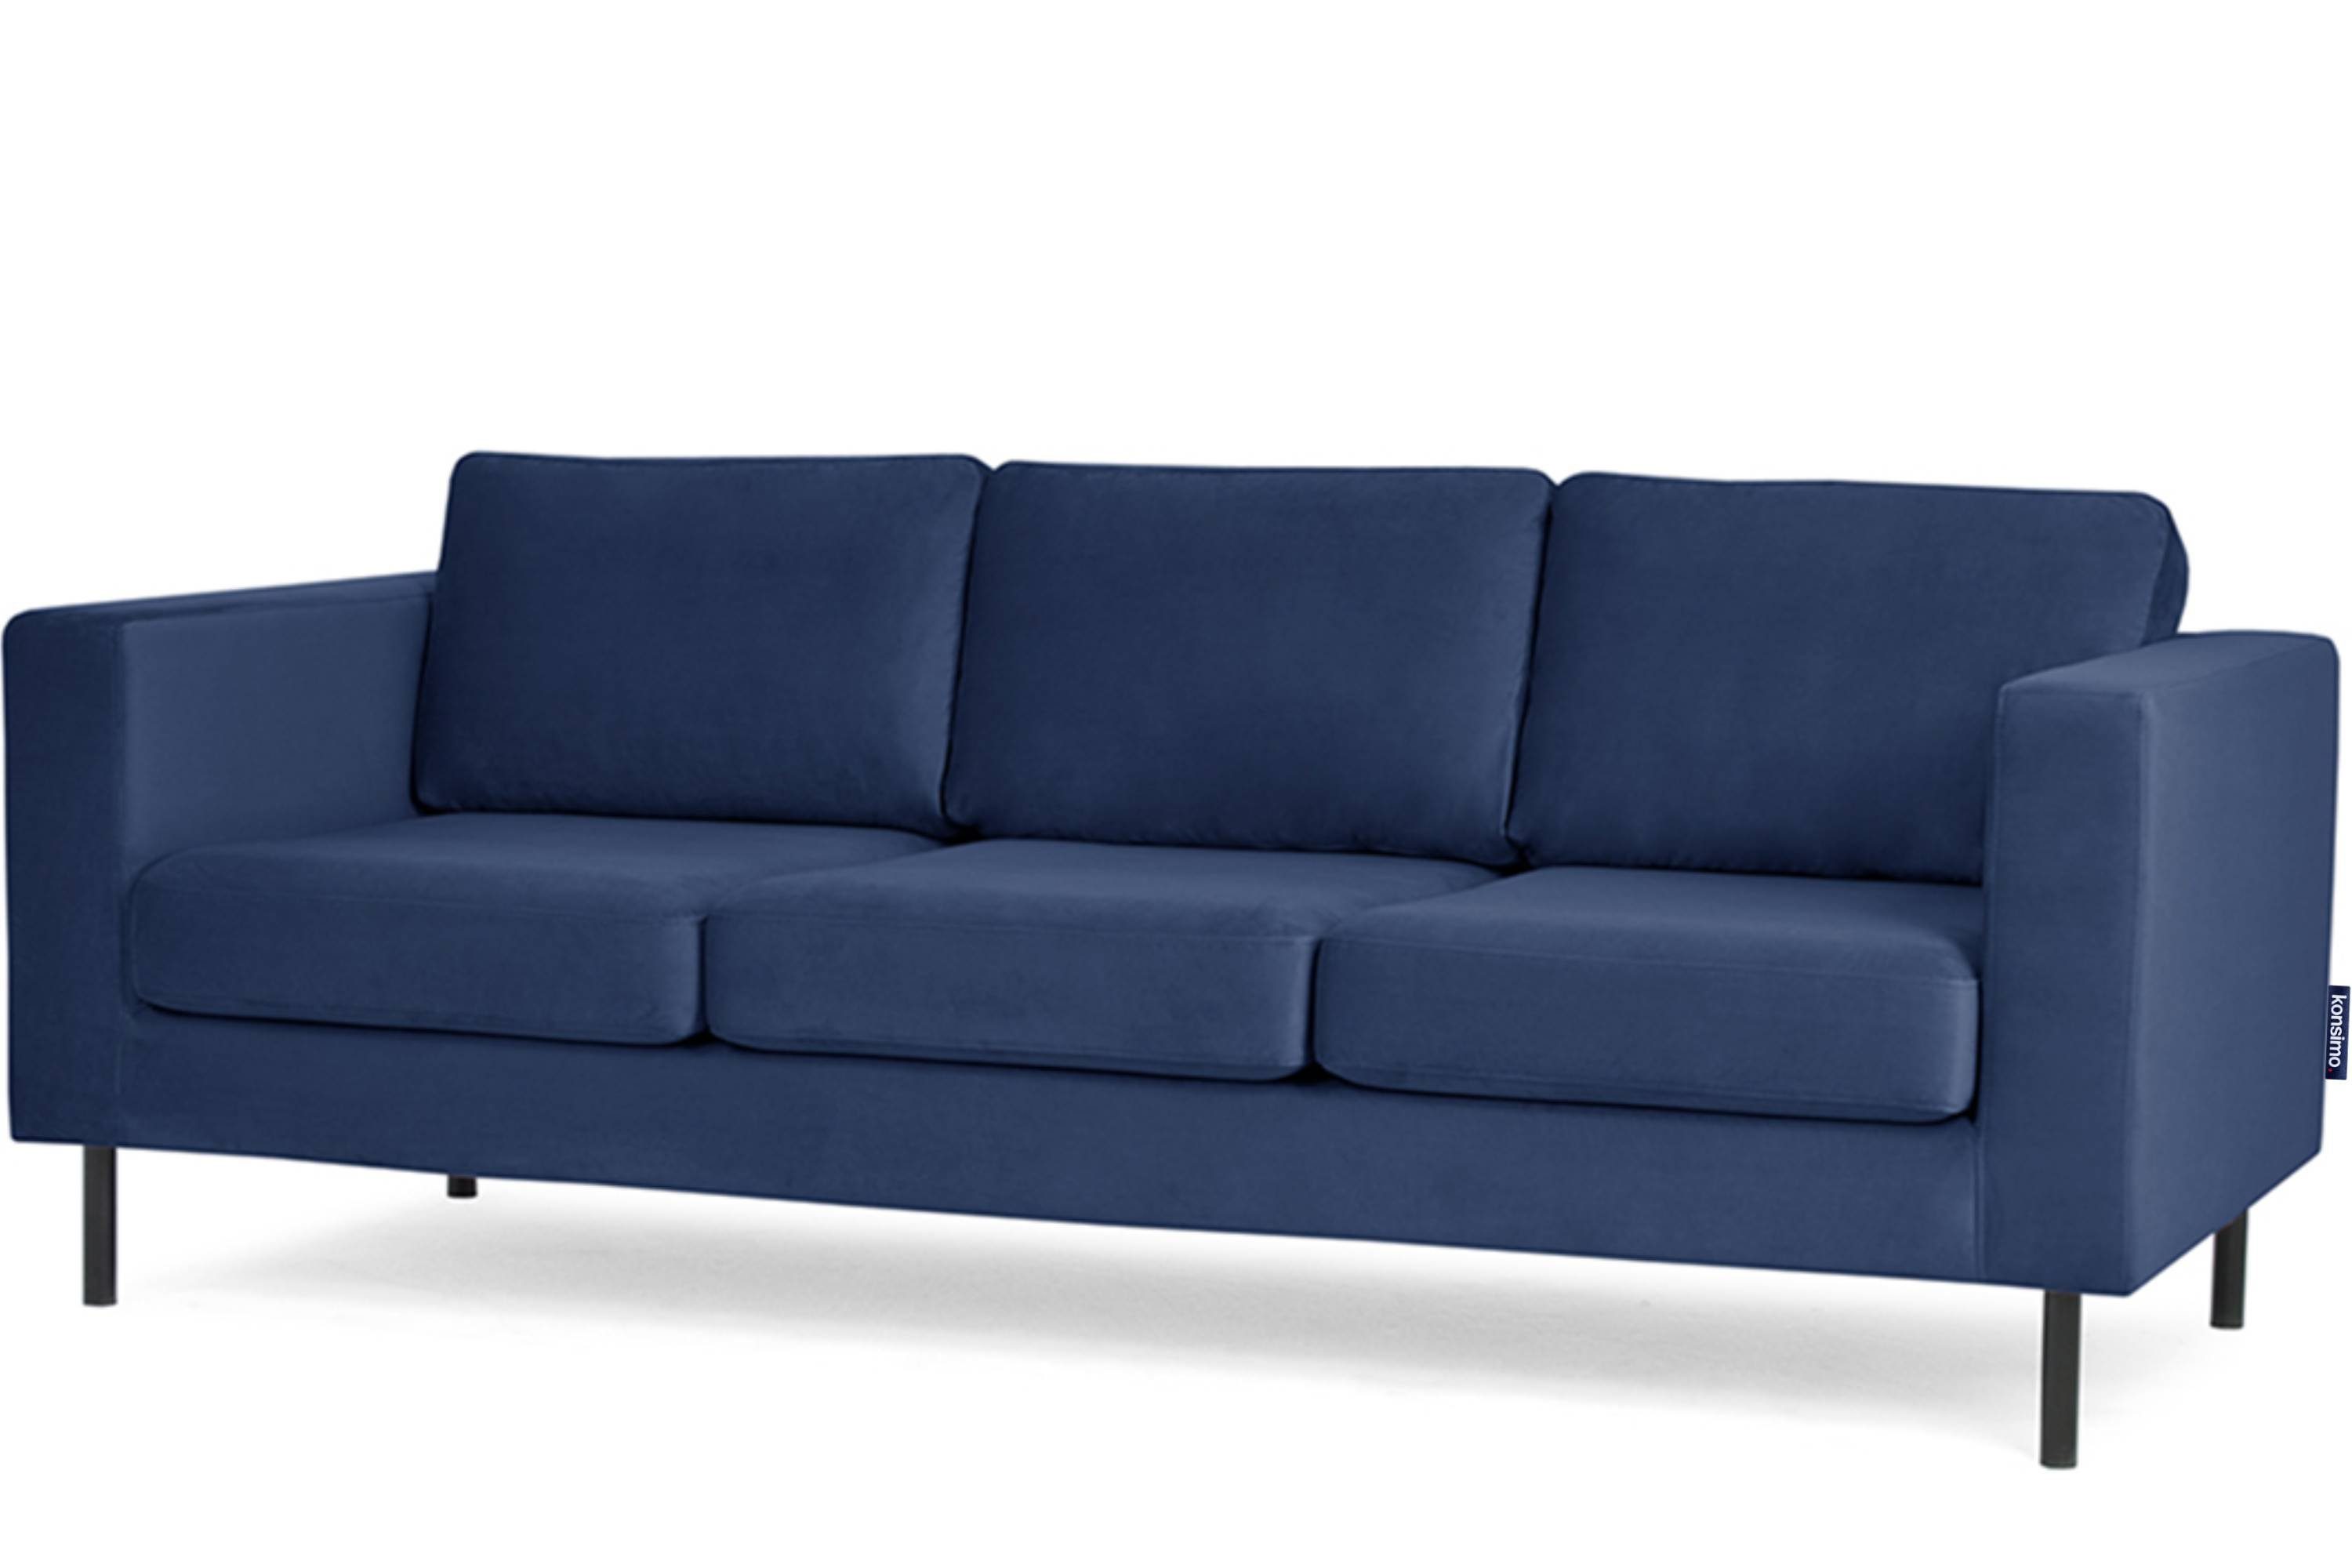 marineblau Konsimo Sofa marineblau hohe 3 Personen, 3-Sitzer marineblau Design | TOZZI Beine, universelles |